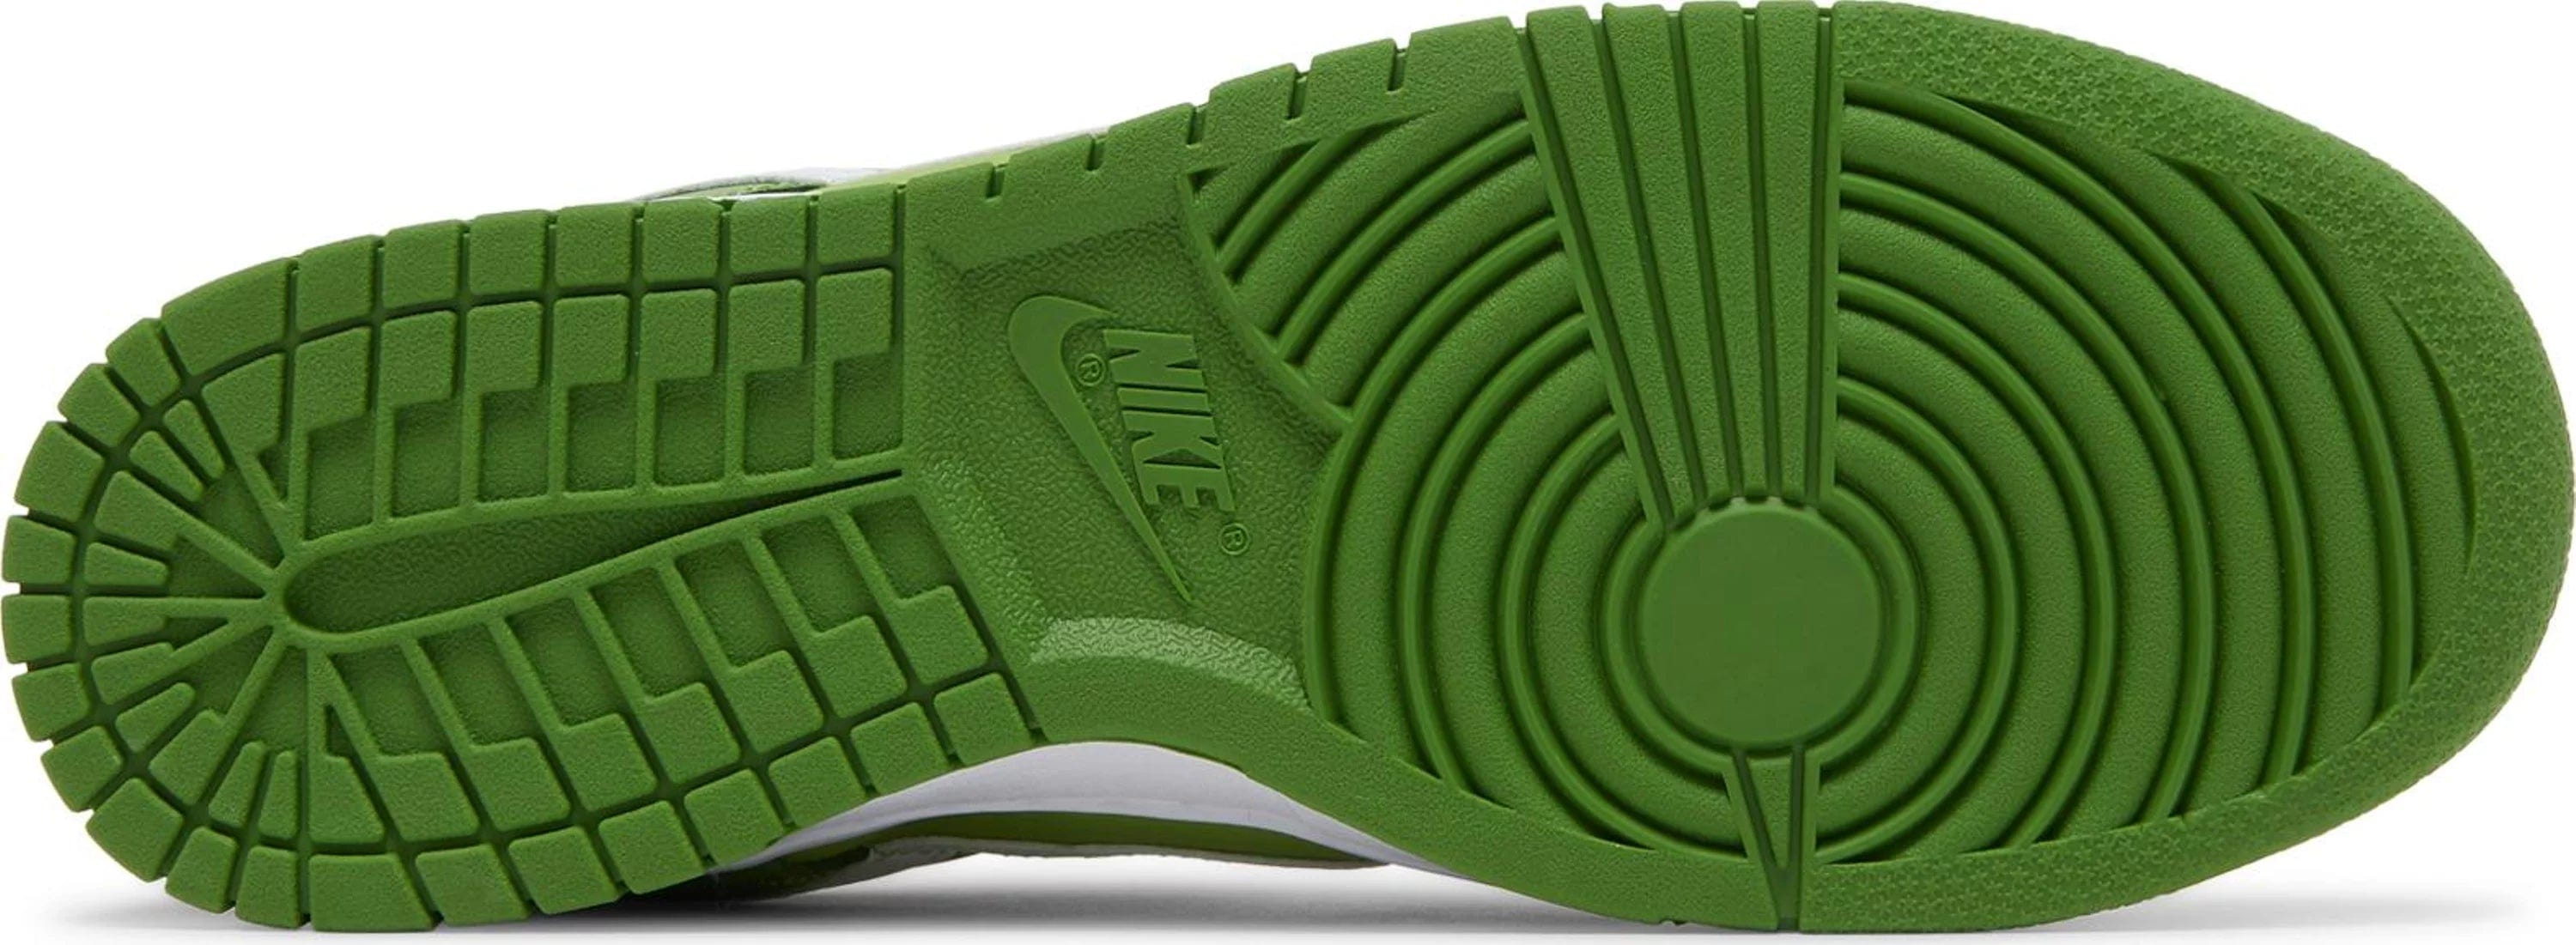 Nike Dunk Low Chlorophyll Men's